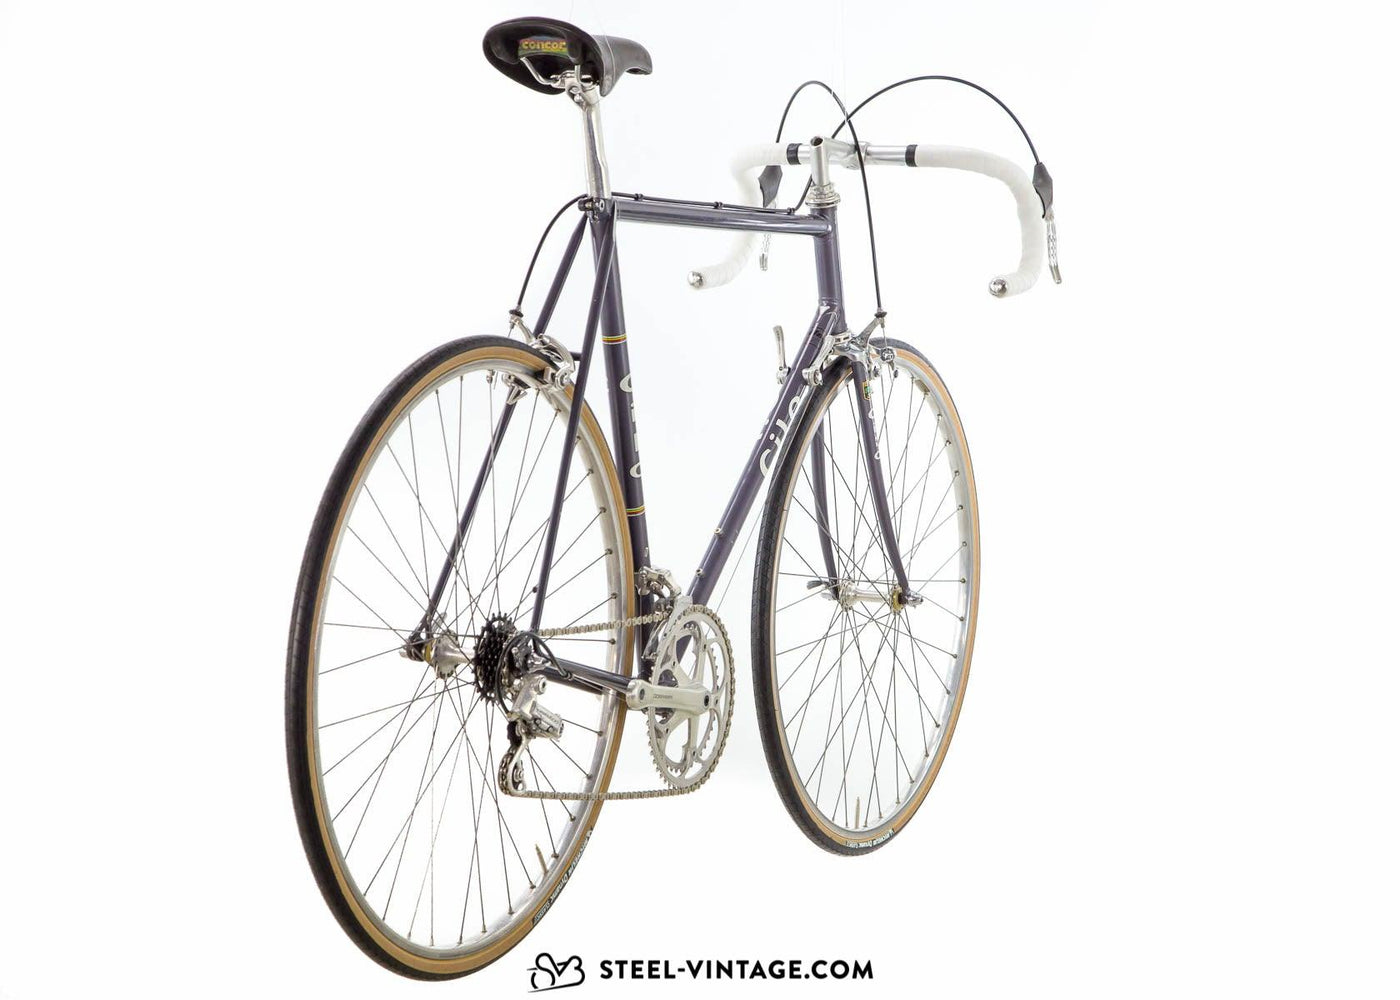 Cilo Swiss Classic Road Bicycle 1980s - Steel Vintage Bikes